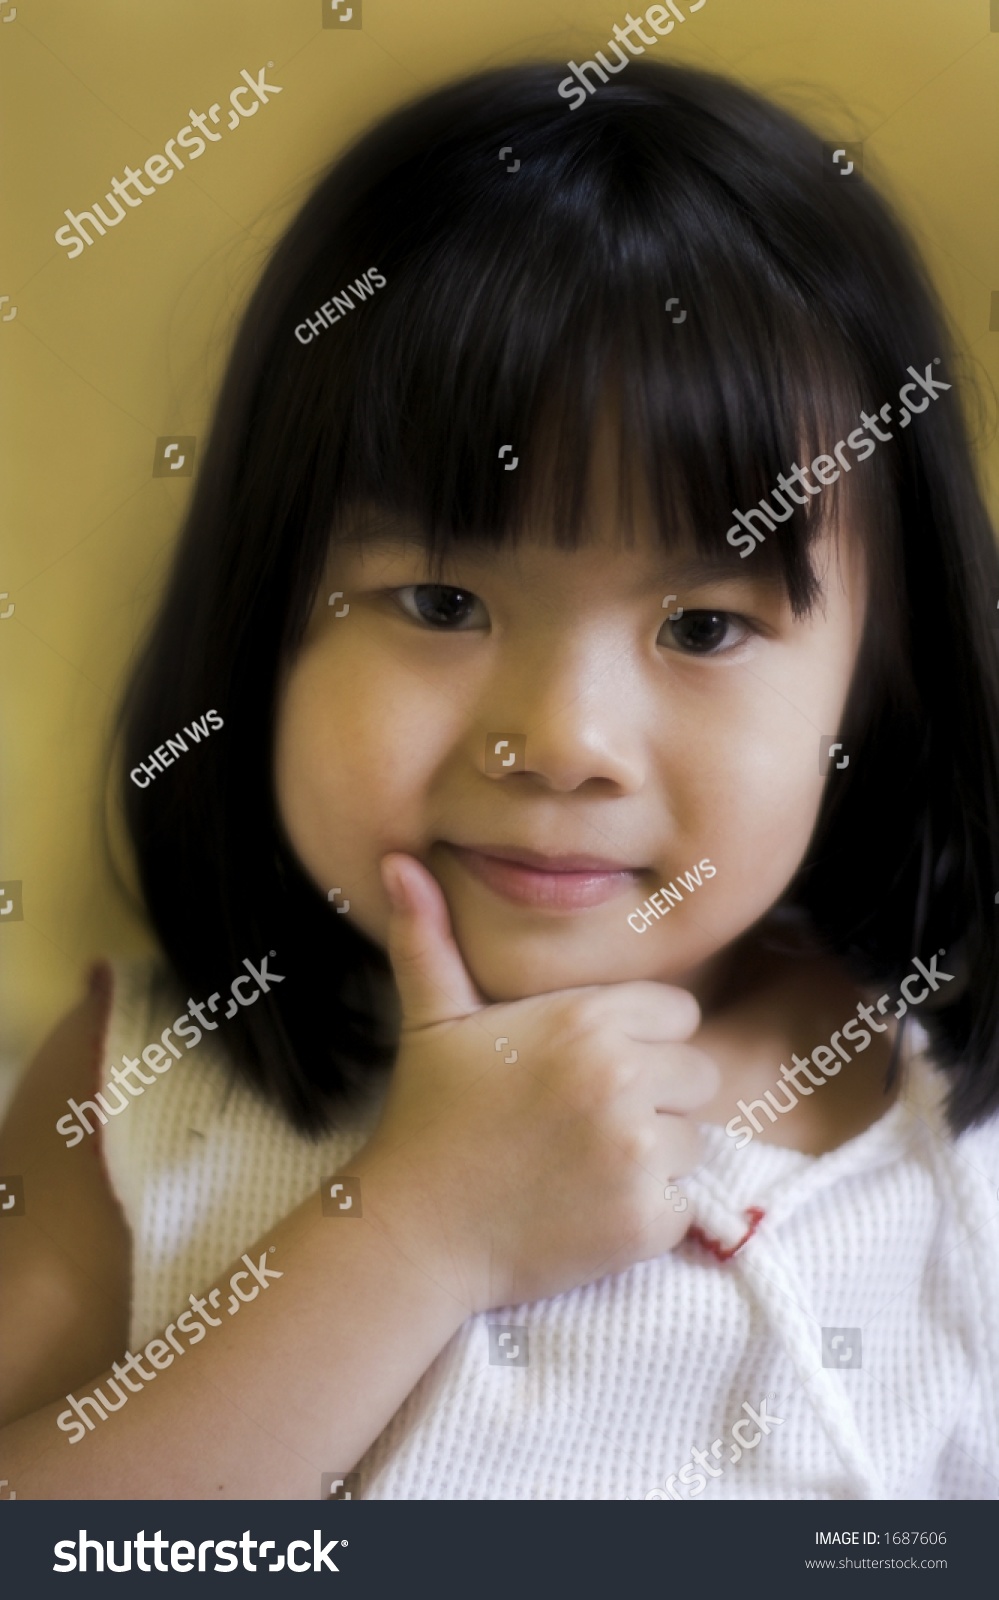 Cute Girl Stock Photo 1687606 : Shutterstock